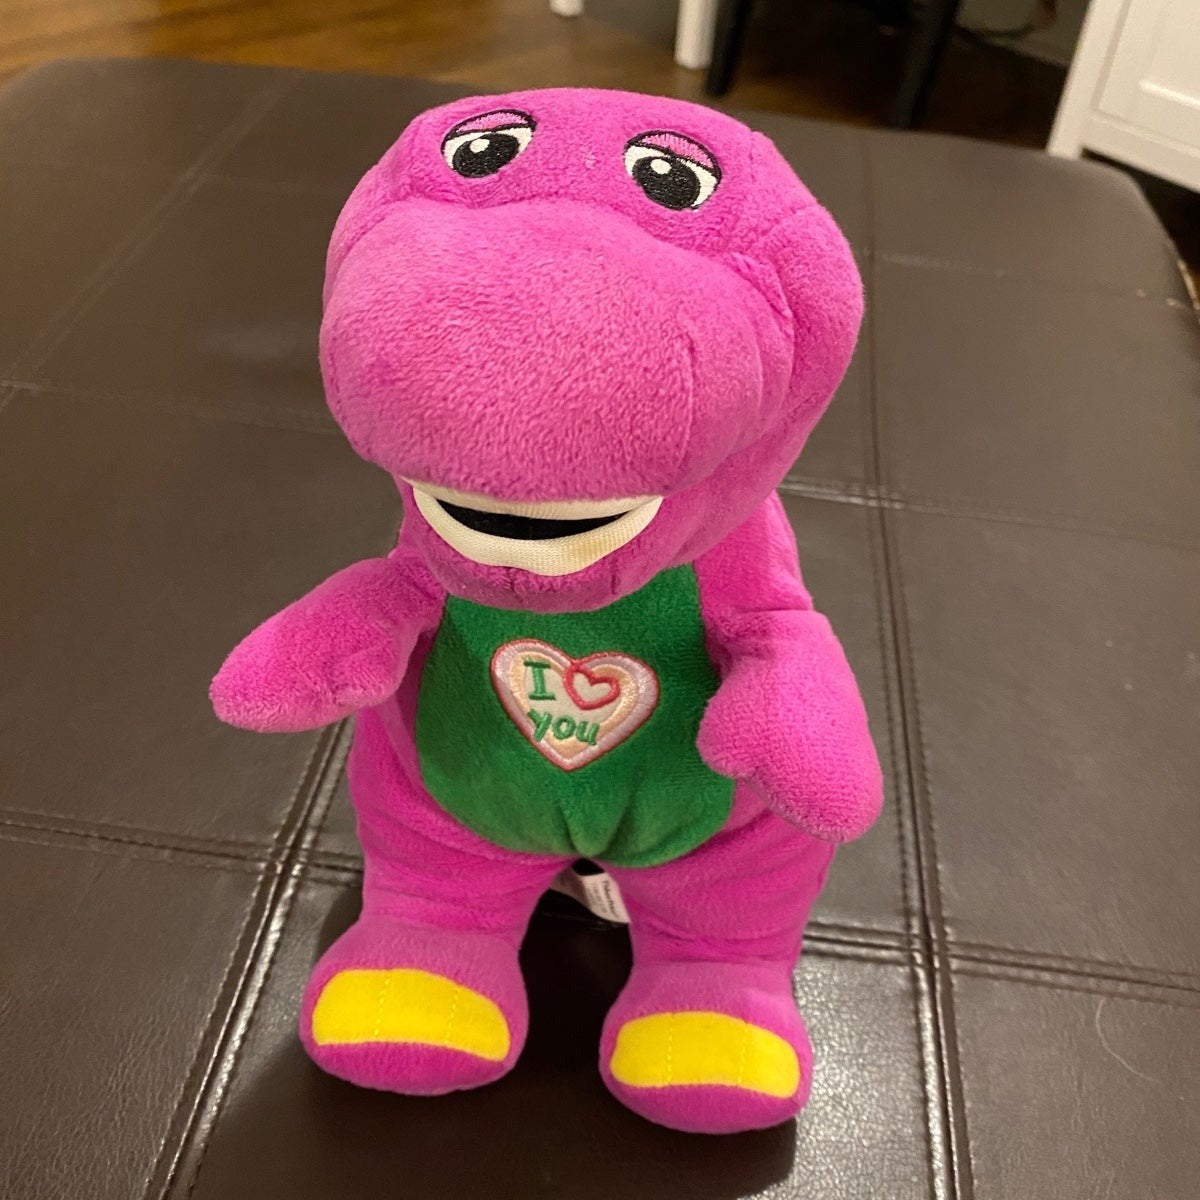 Singing Barney plush toy